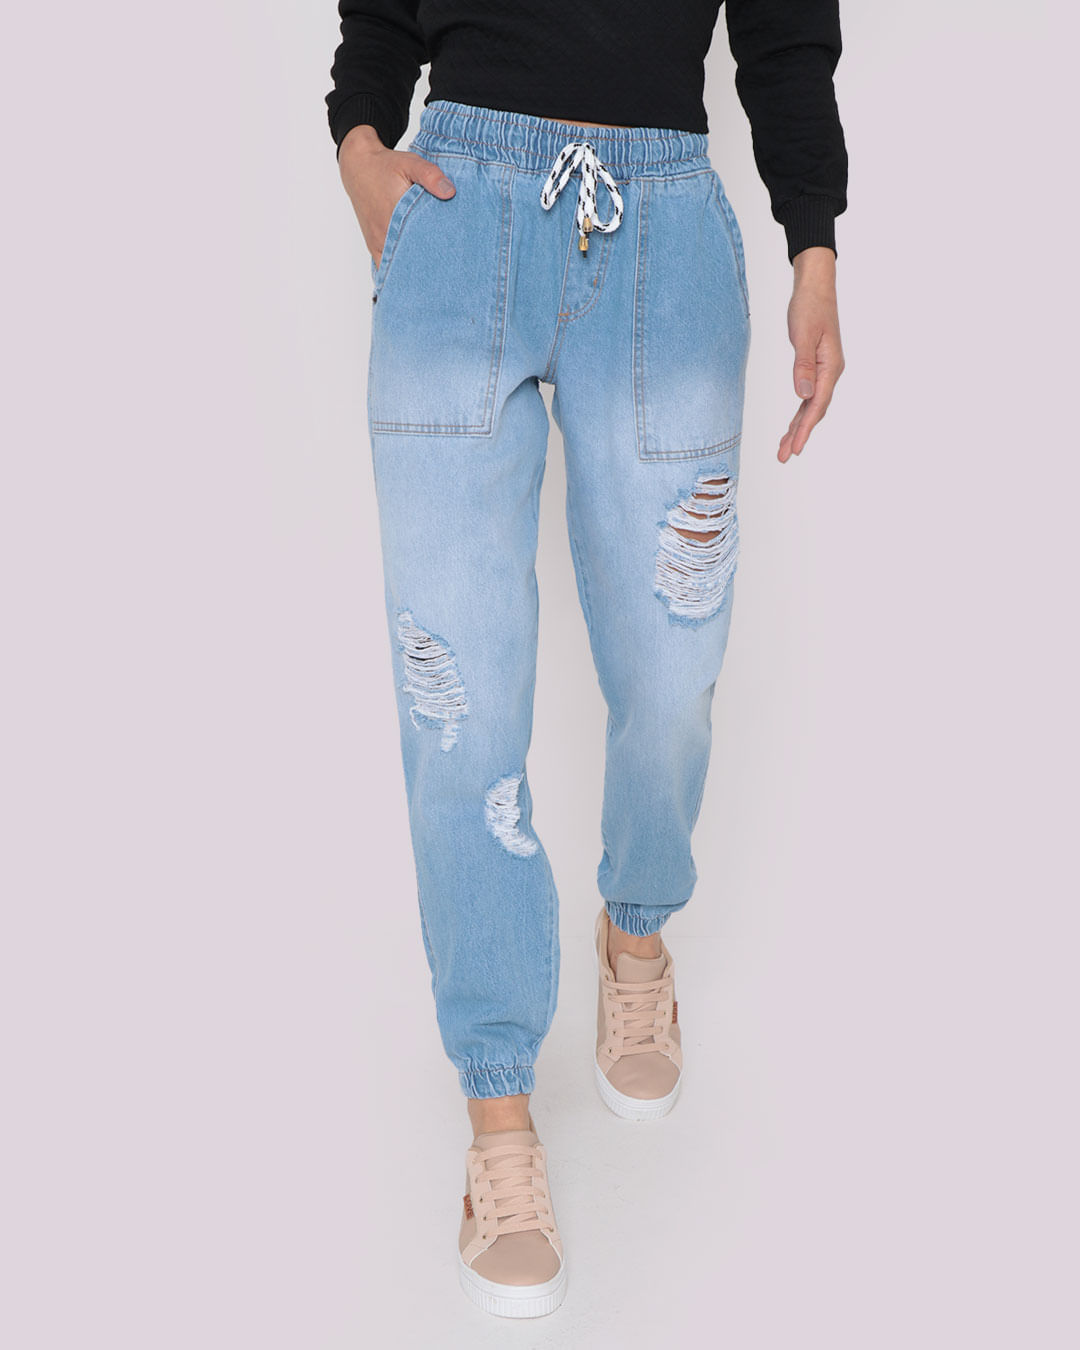 Calca-Jeans-Feminina-Destroyed-Jogger-Azul